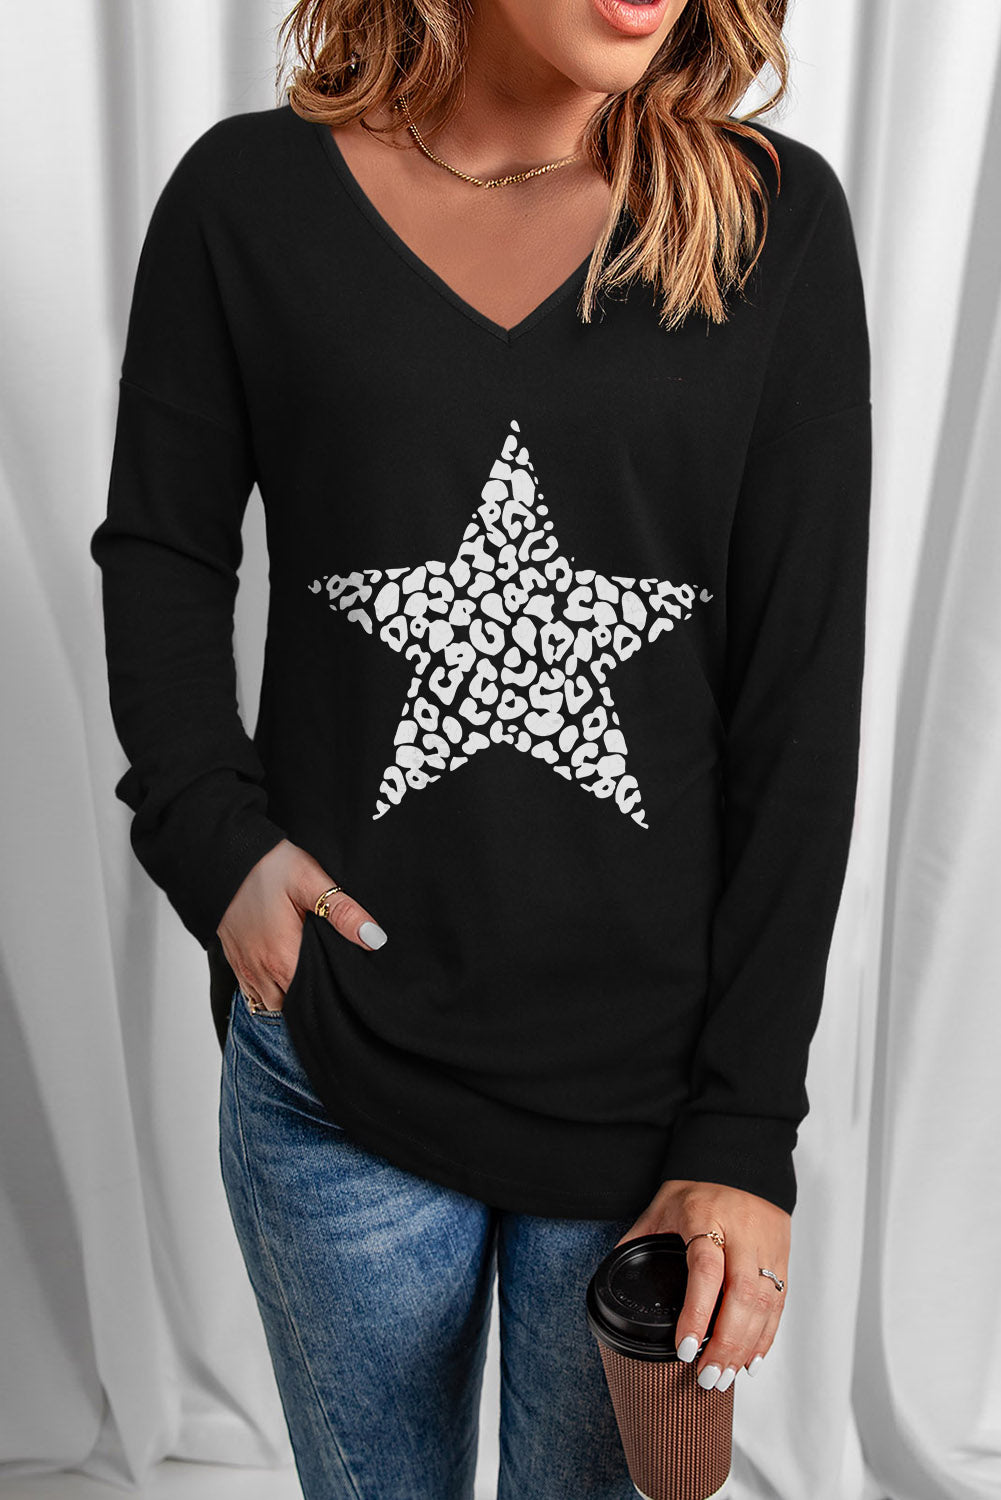 LADIES--You Deserve a STAR!! Leopard Star Graphic V-Neck Top